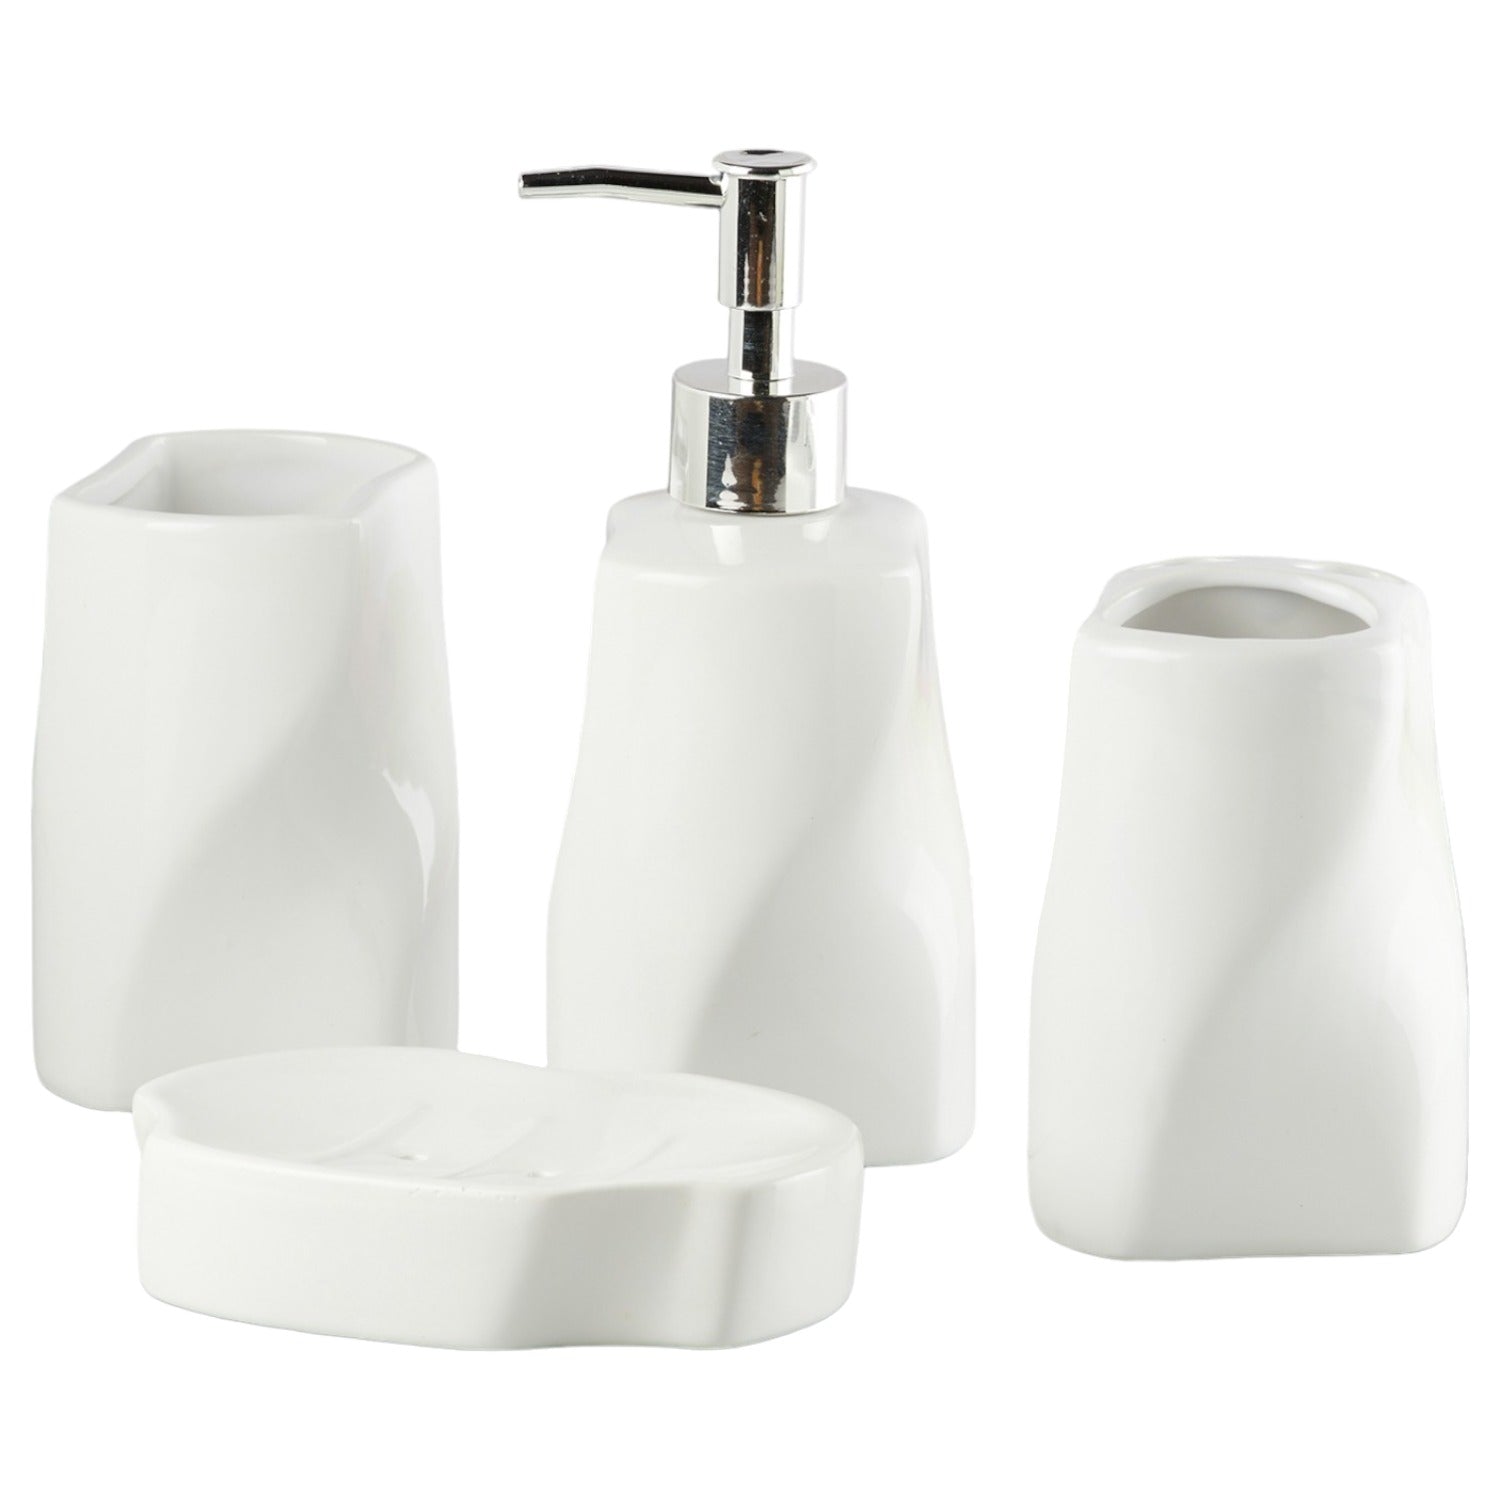 Ceramic Bathroom Set of 4 with Soap Dispenser (10236)